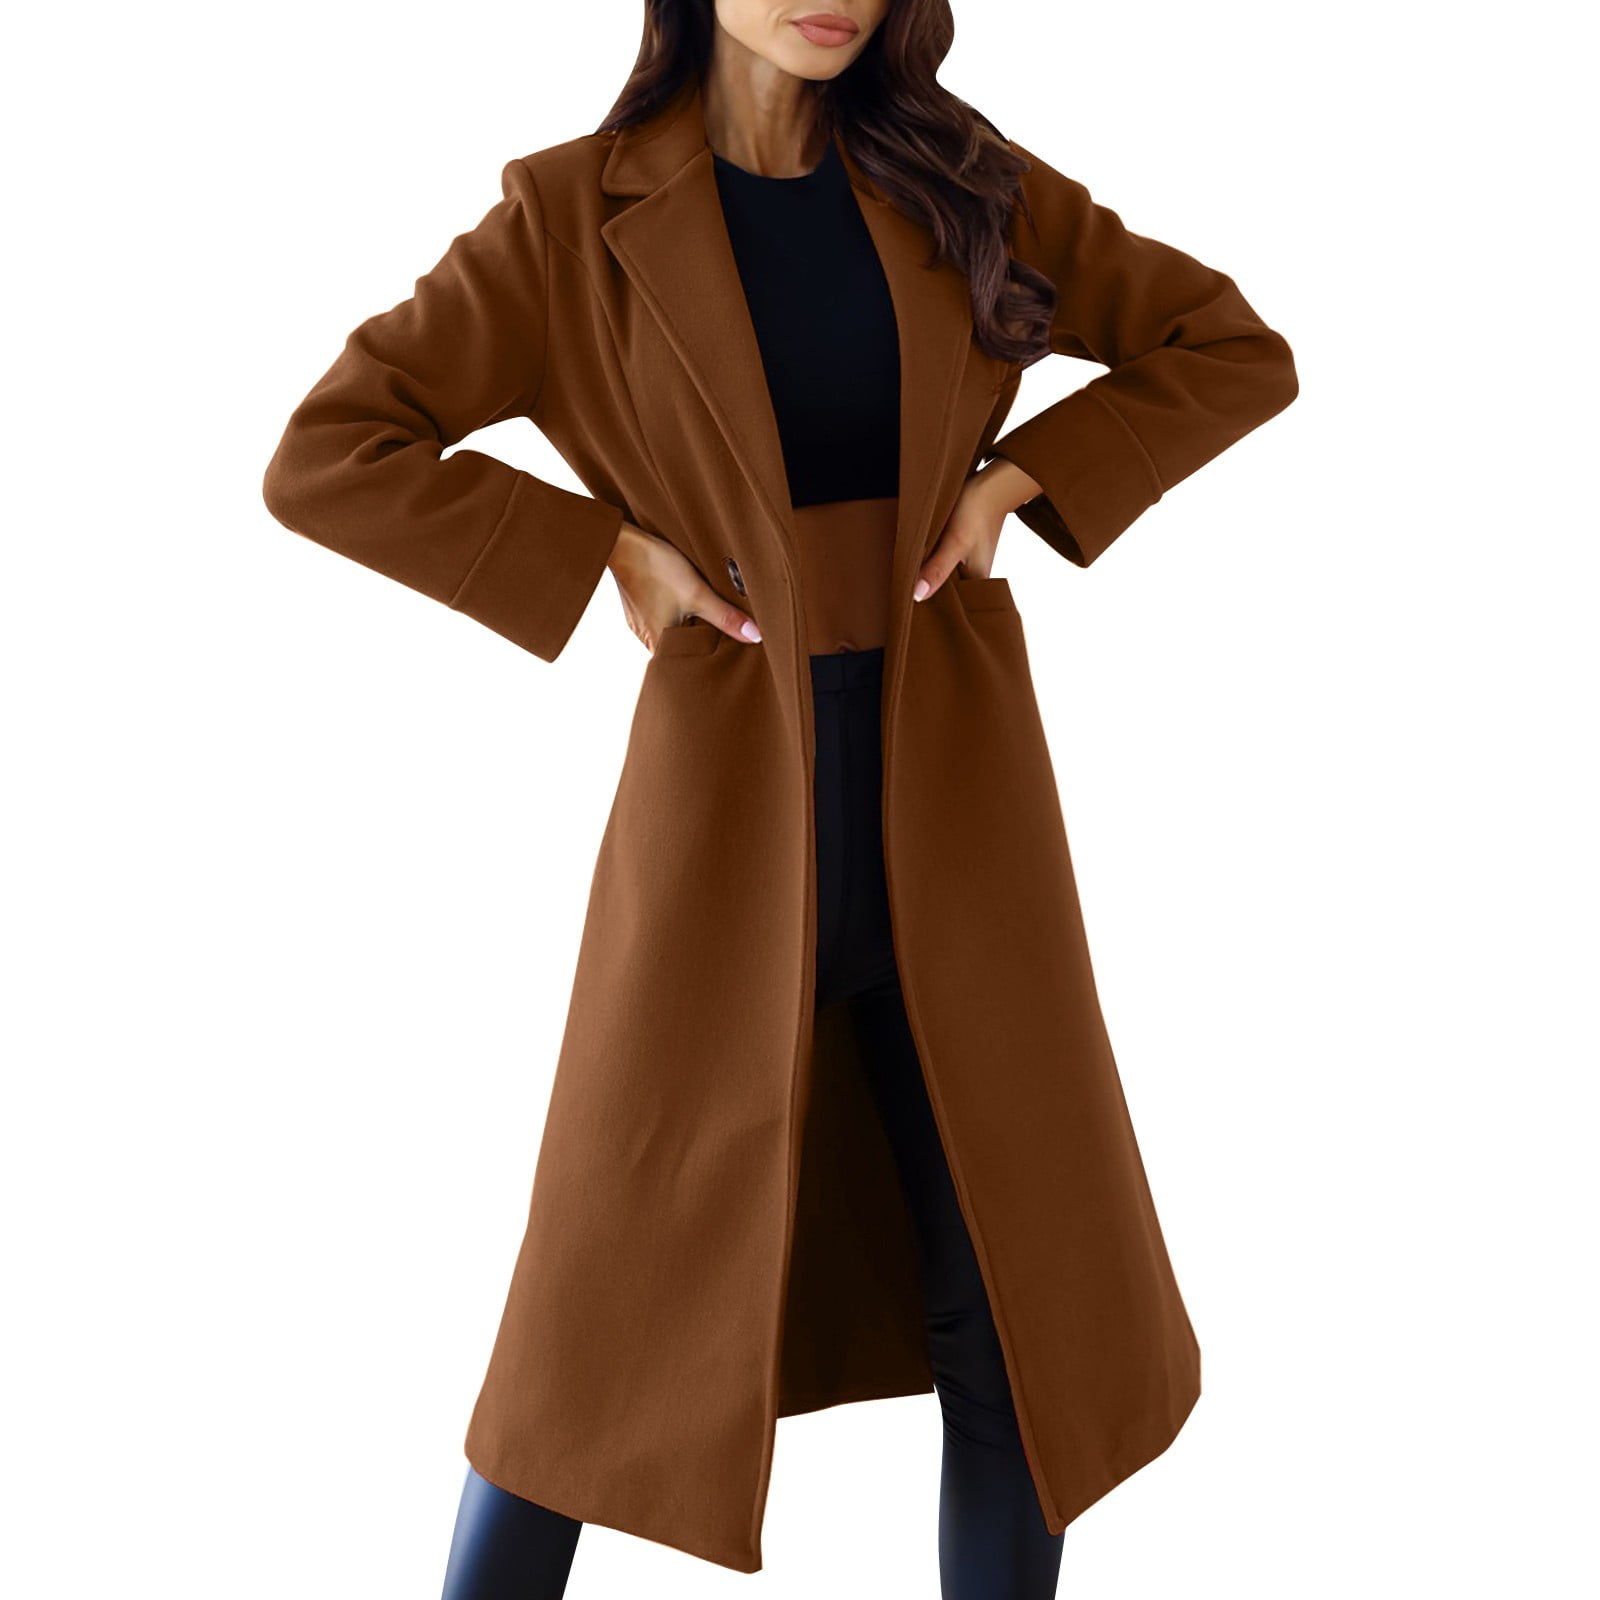 Noarlalf Winter Coats for Women, Solid Color Lapel Double Breasted Coat ...